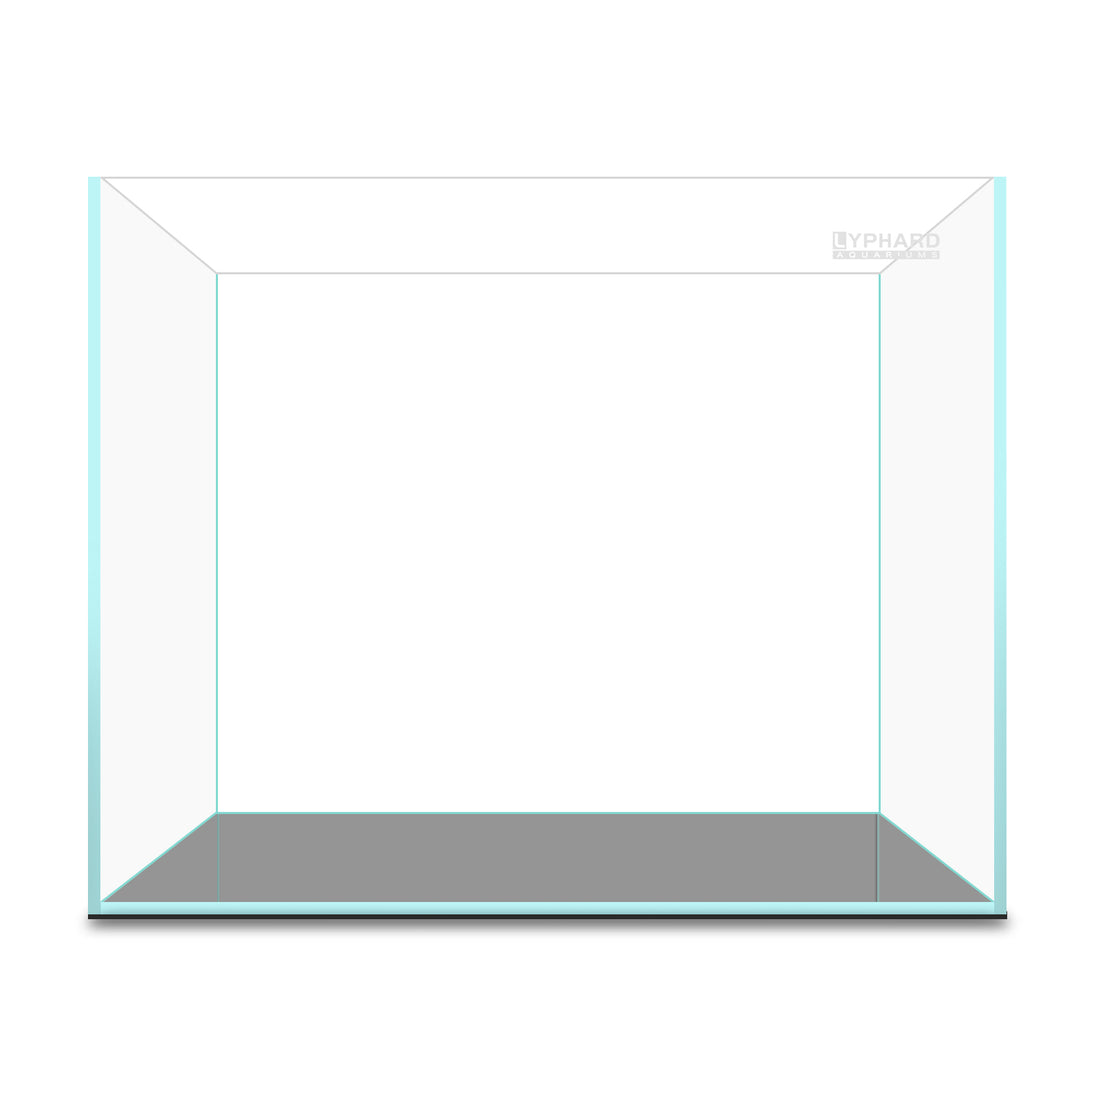 Ultra White Clear Glass Low Iron Aquarium Tank 9 Gal